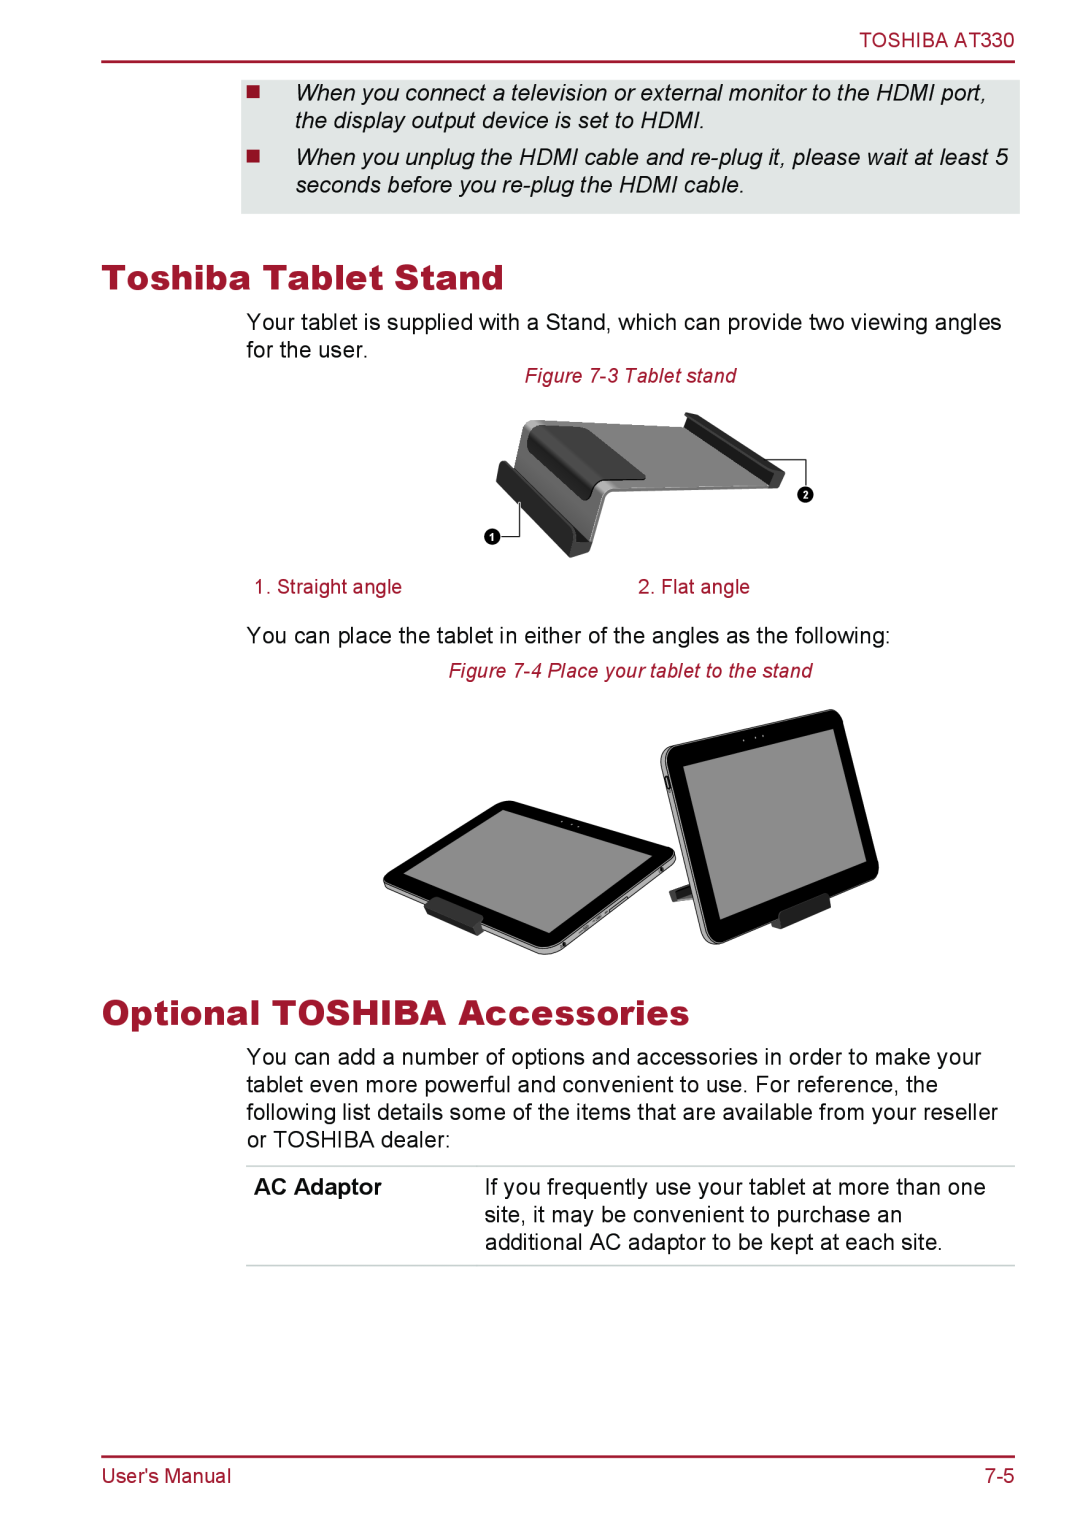 Toshiba at330 user manual Toshiba Tablet Stand, Optional TOSHIBA Accessories, AC Adaptor 